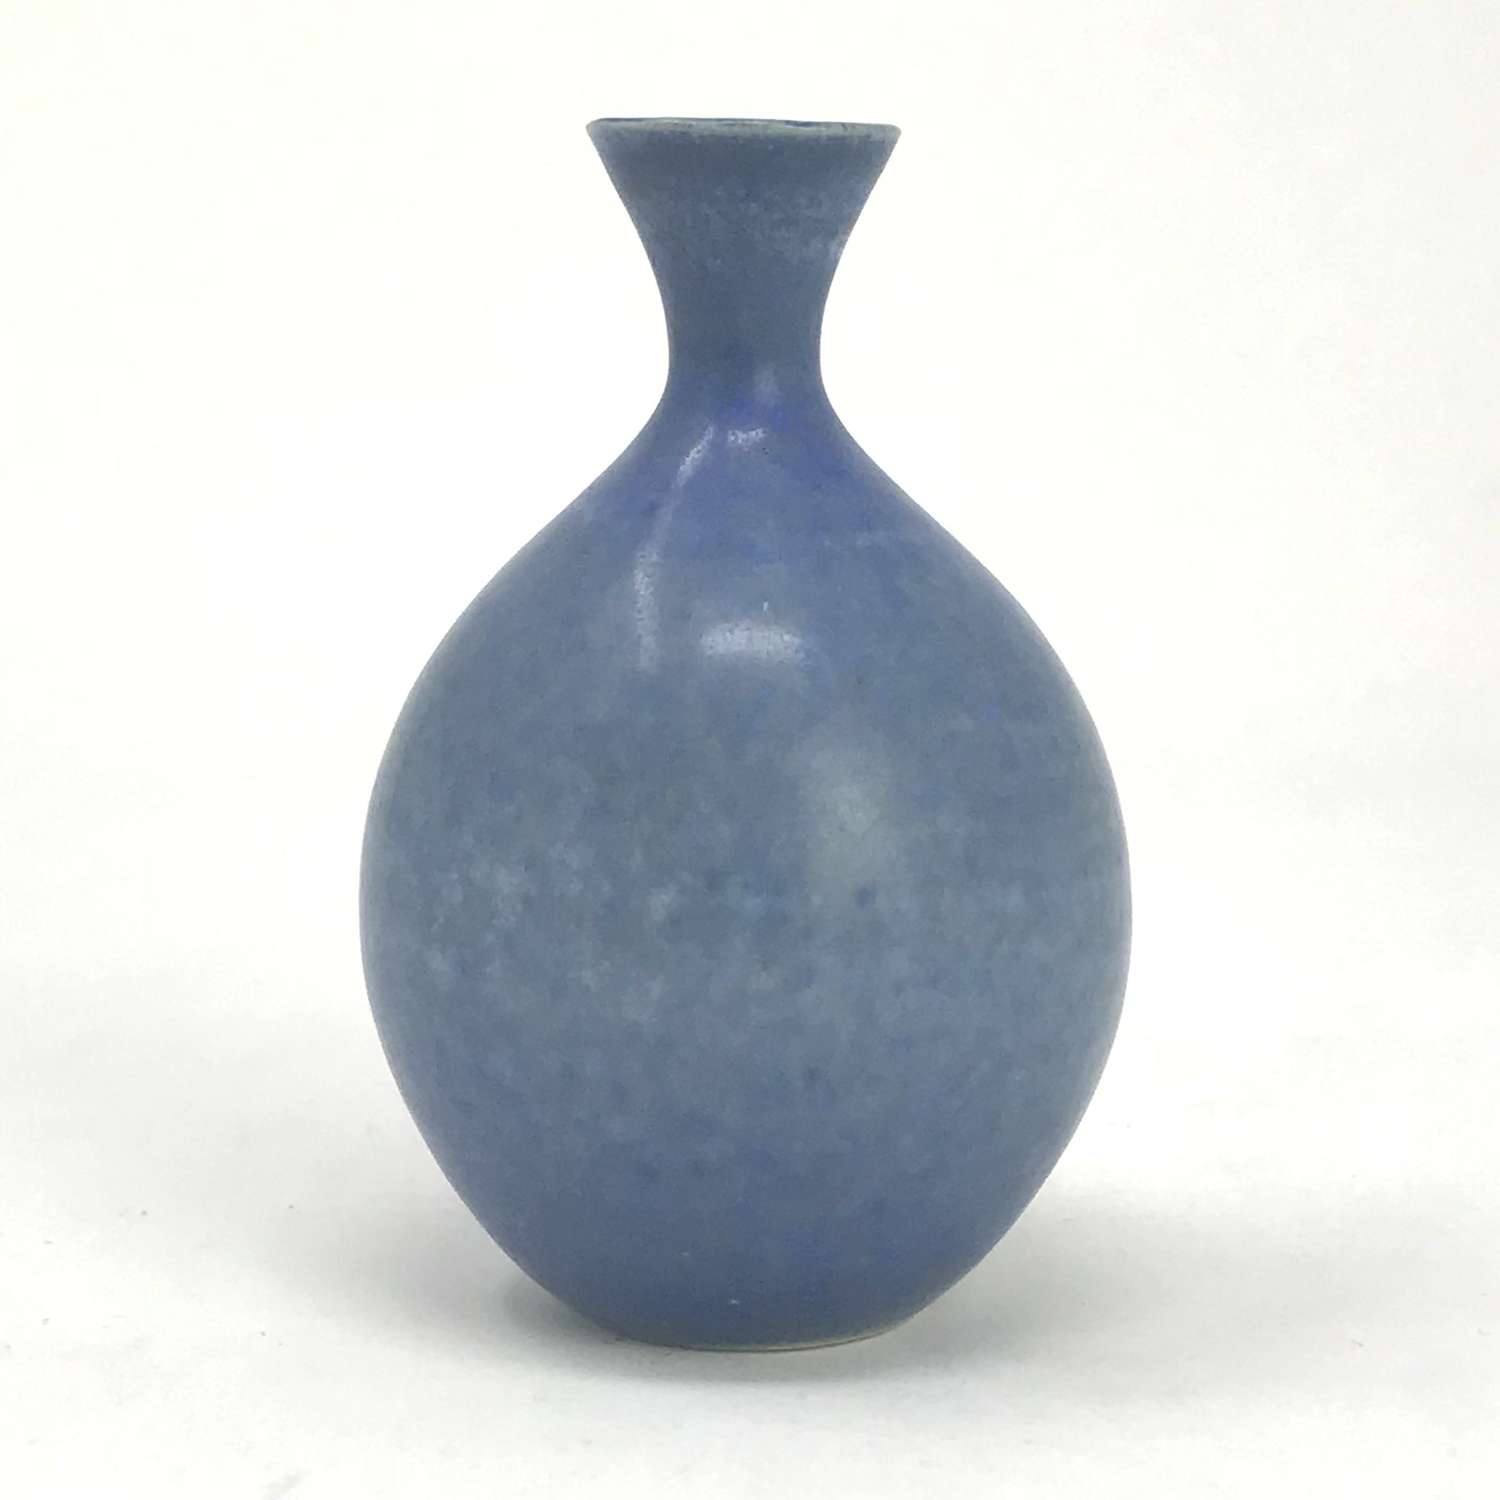 Sven Wejsfelt small unique blue stoneware vase Gustavsberg 2005